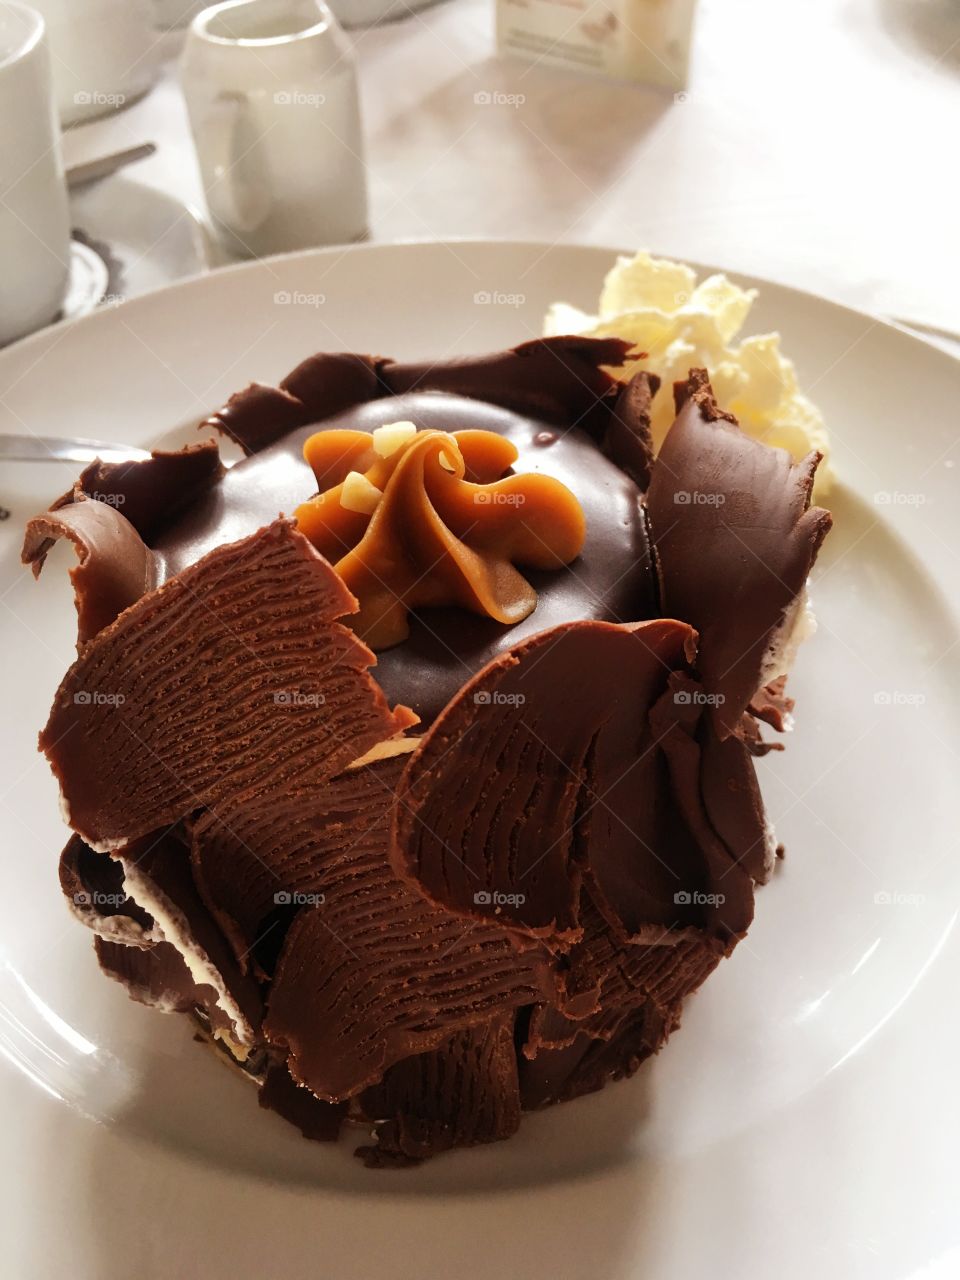 A mini chocolate cake